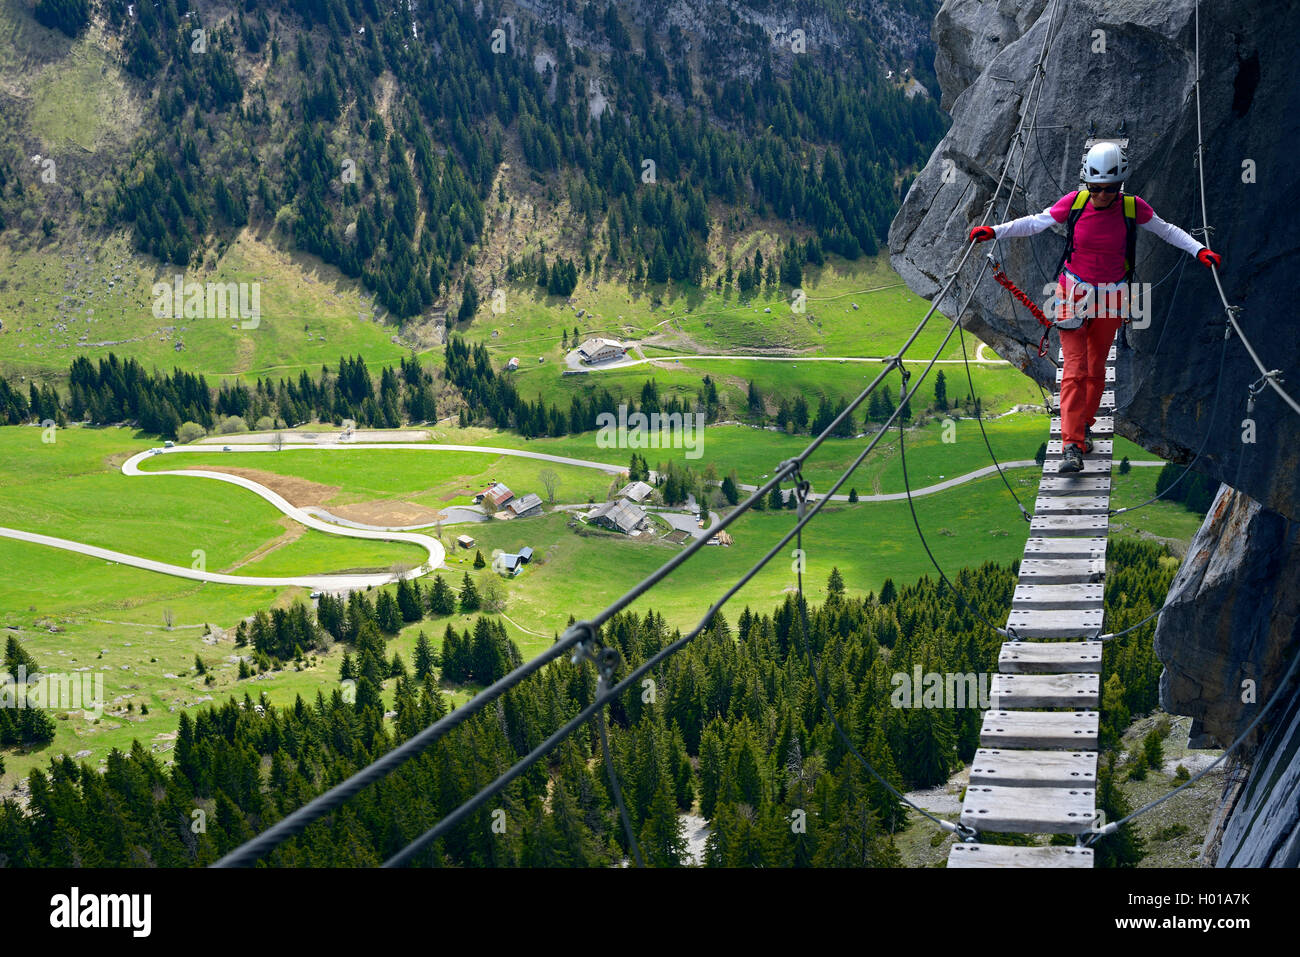 climber on simple suspension bridge, Via ferrata Yves Pollet-Villard, France, Haute Savoie, La Clusaz Stock Photo